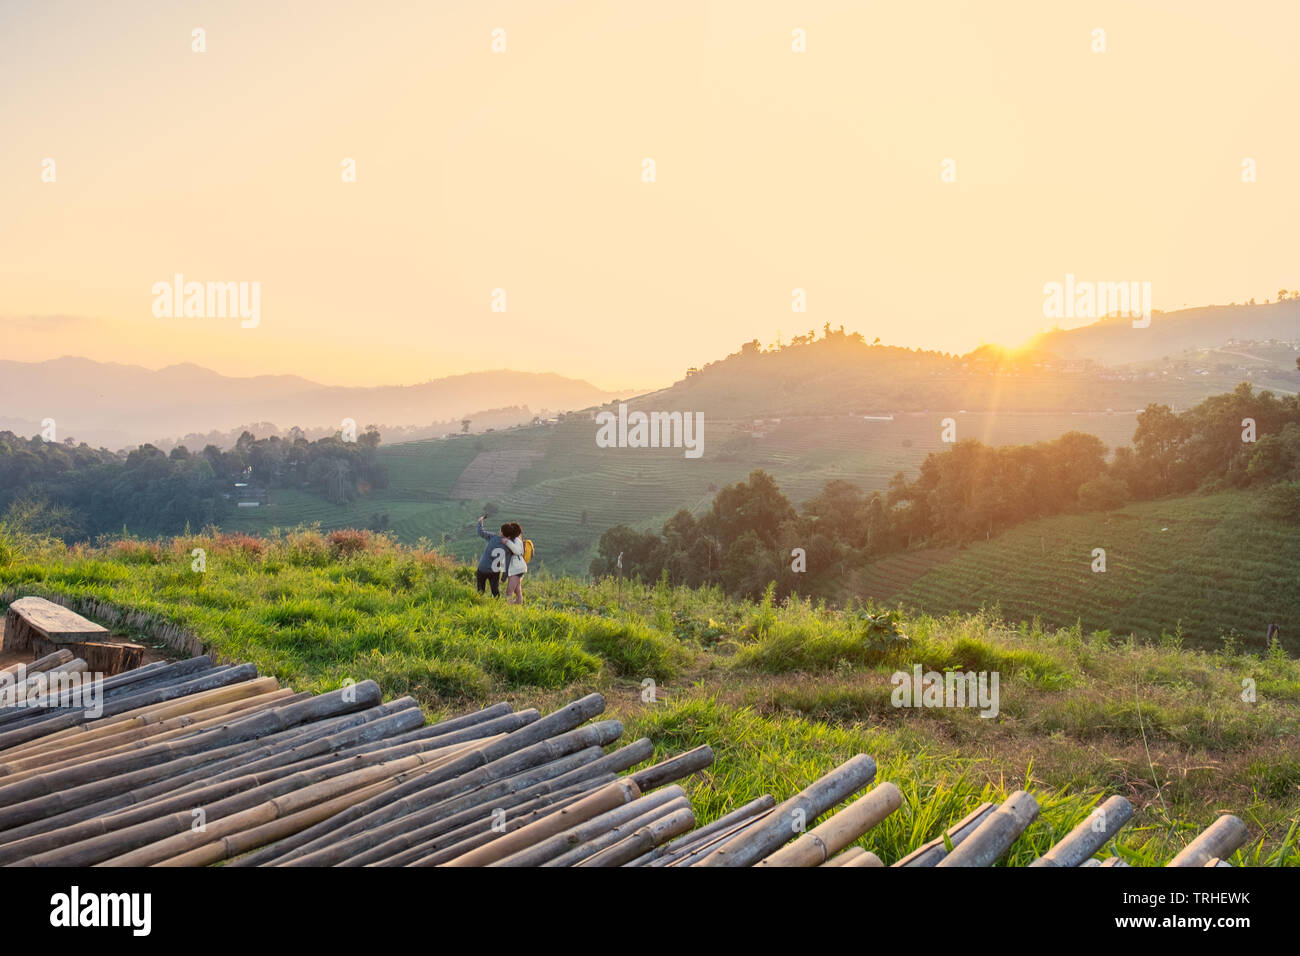 Mon cham,Mon jam,landscape sunset twilight beautiful at chiang mai Stock Photo